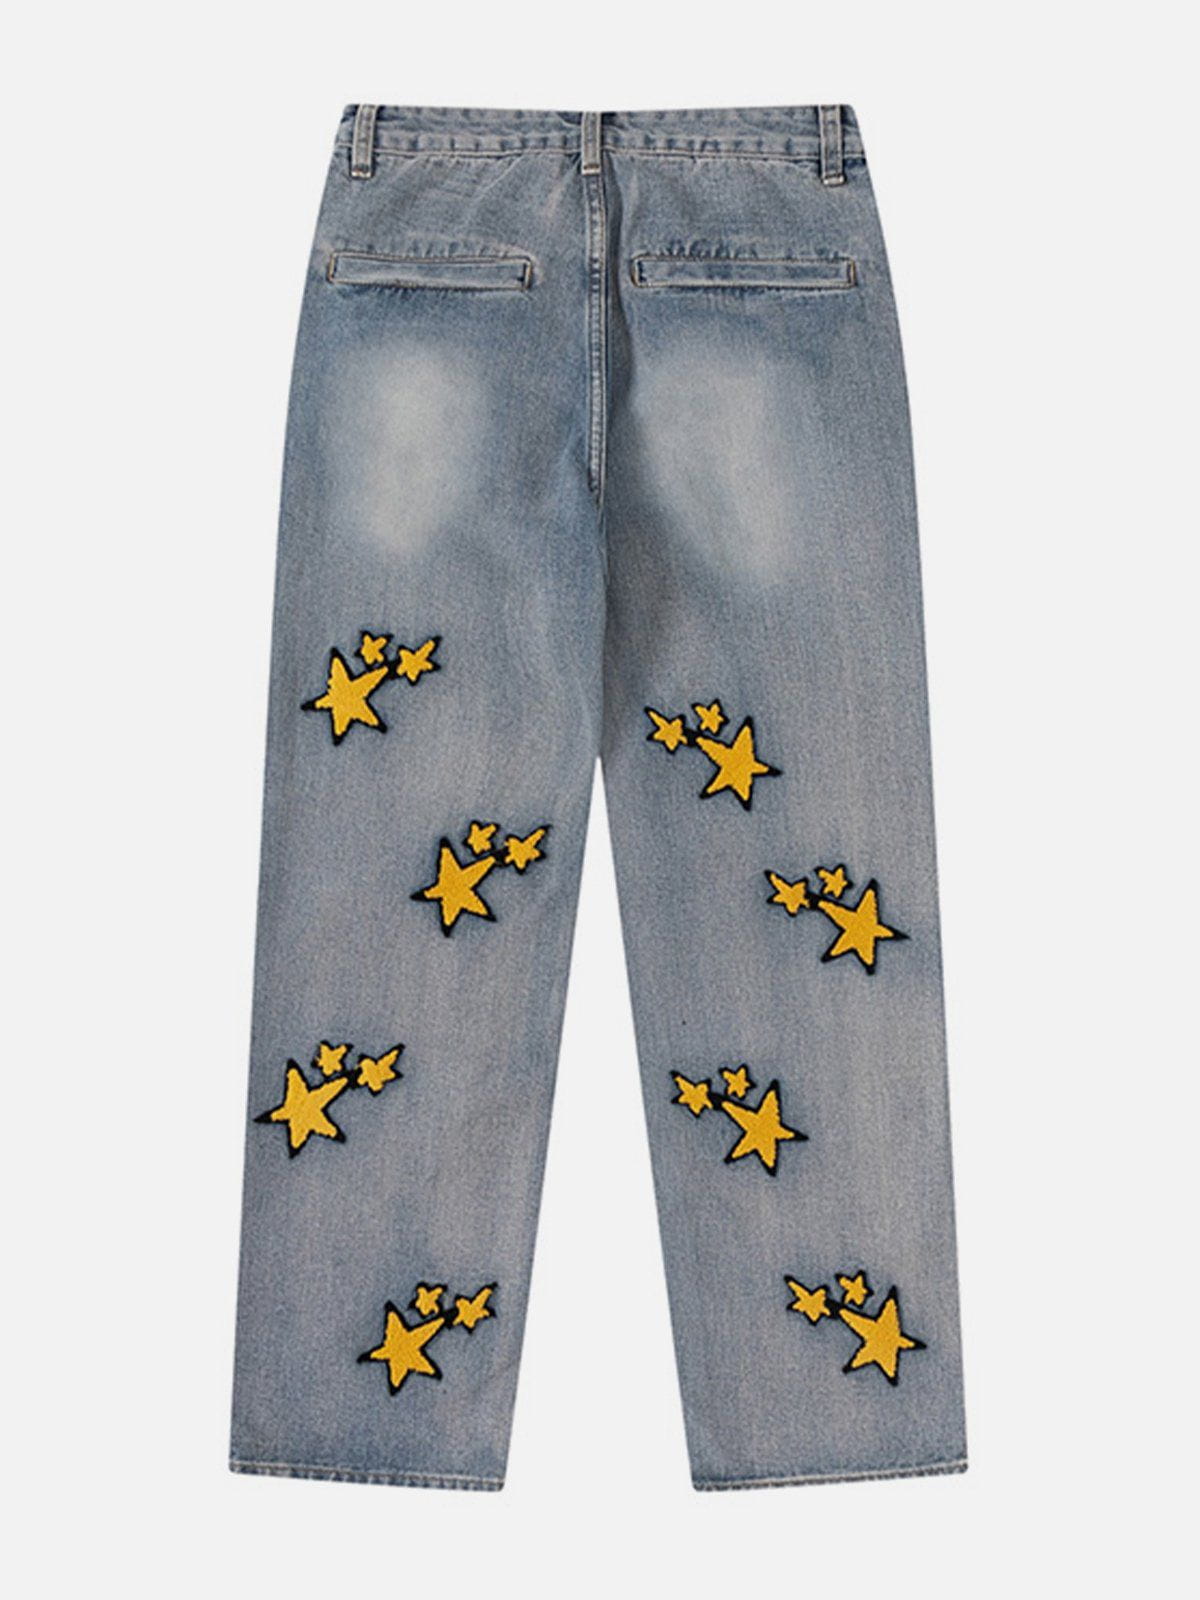 Majesda® - Flocked Star Jeans outfit ideas streetwear fashion